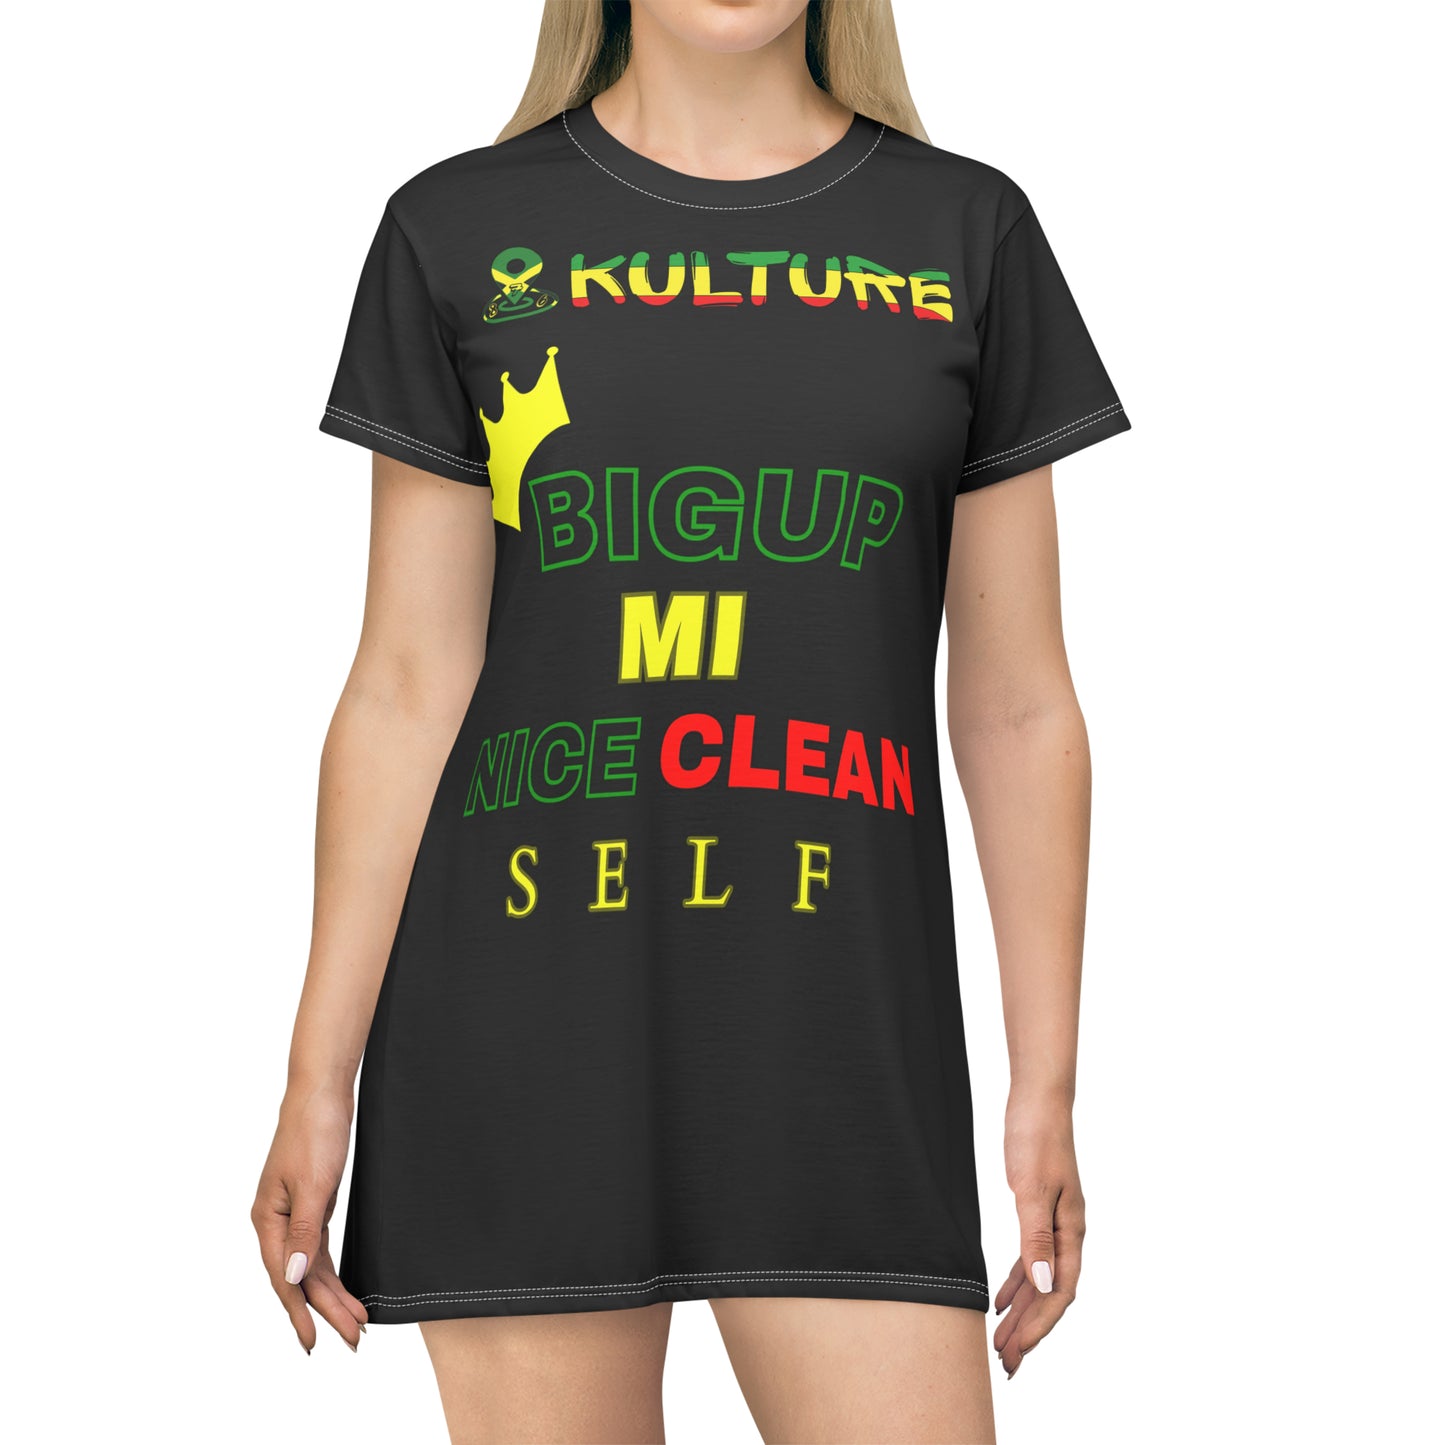 876 kulture T-Shirt Dress (AOP)